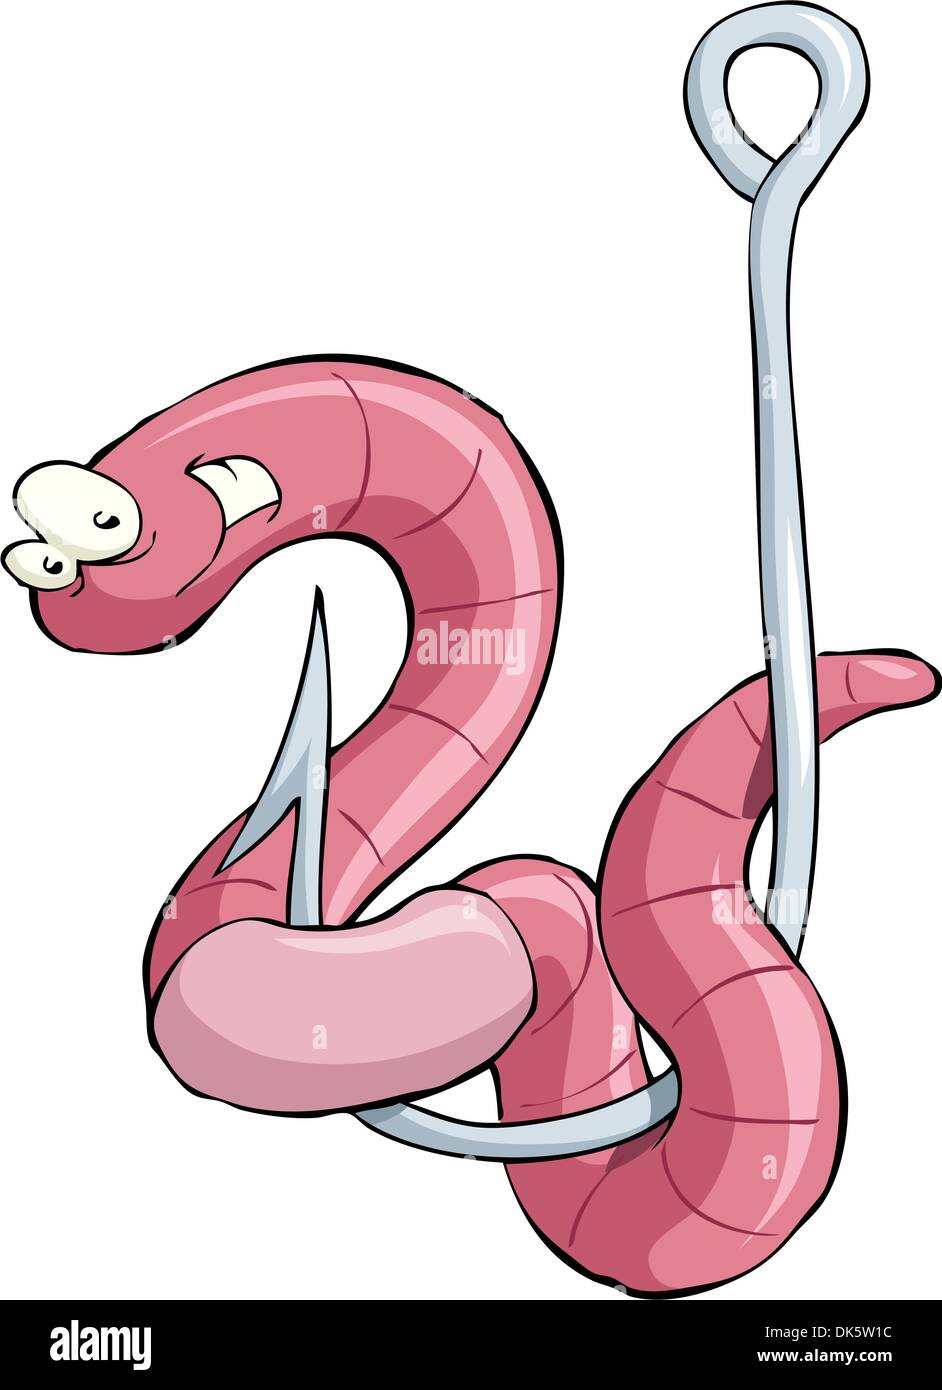 https://c8.alamy.com/comp/DK5W1C/cartoon-worm-on-a-hook-vector-illustration-DK5W1C.jpg